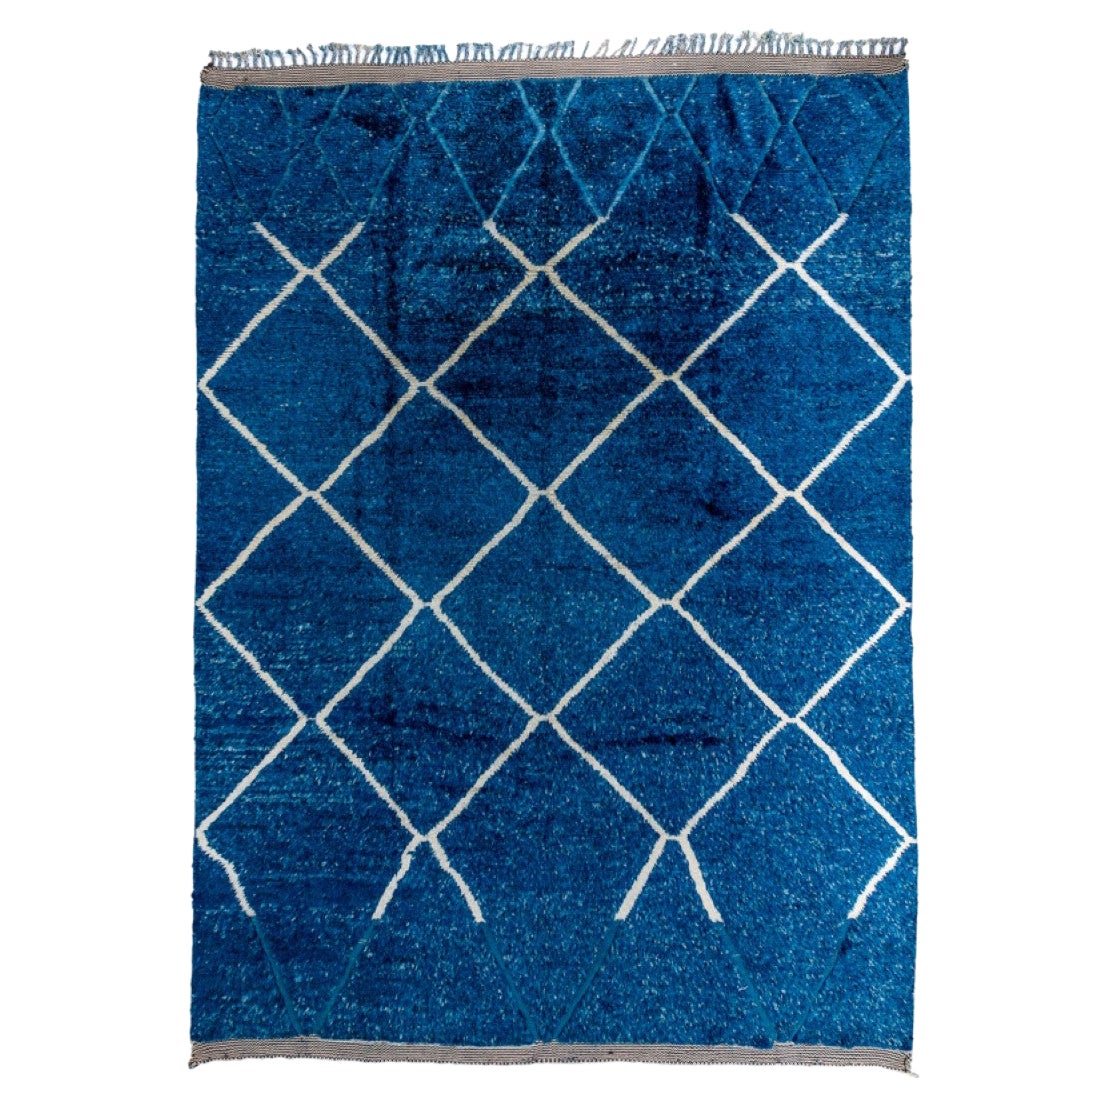 Modern Denim Blue Field Moroccan Design Rug For Sale